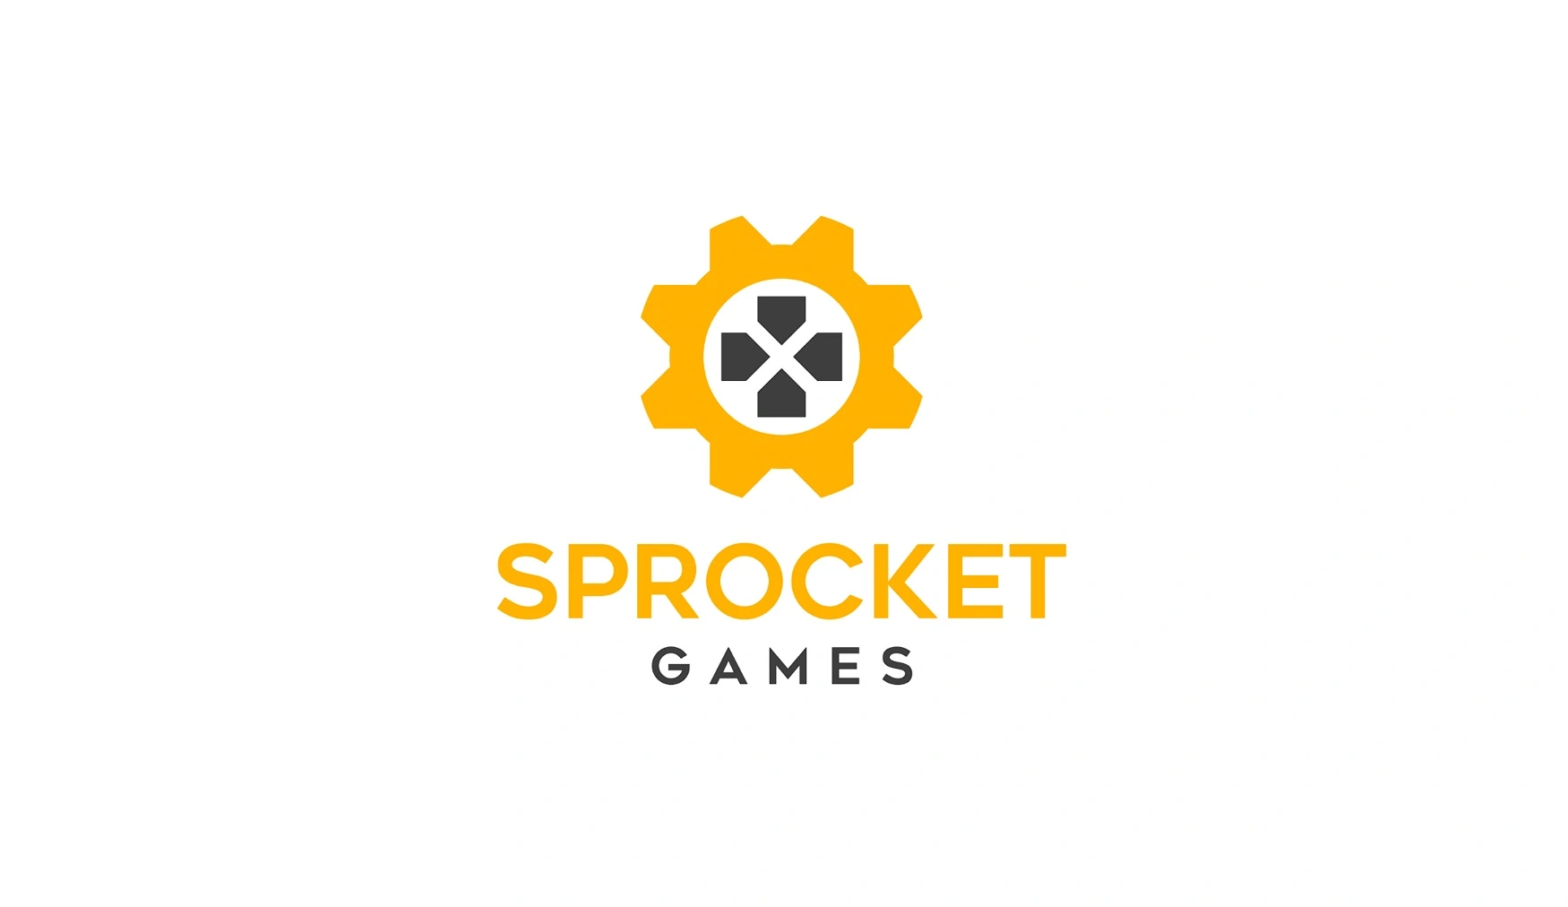 Sprocket Games raises $5 million in investment